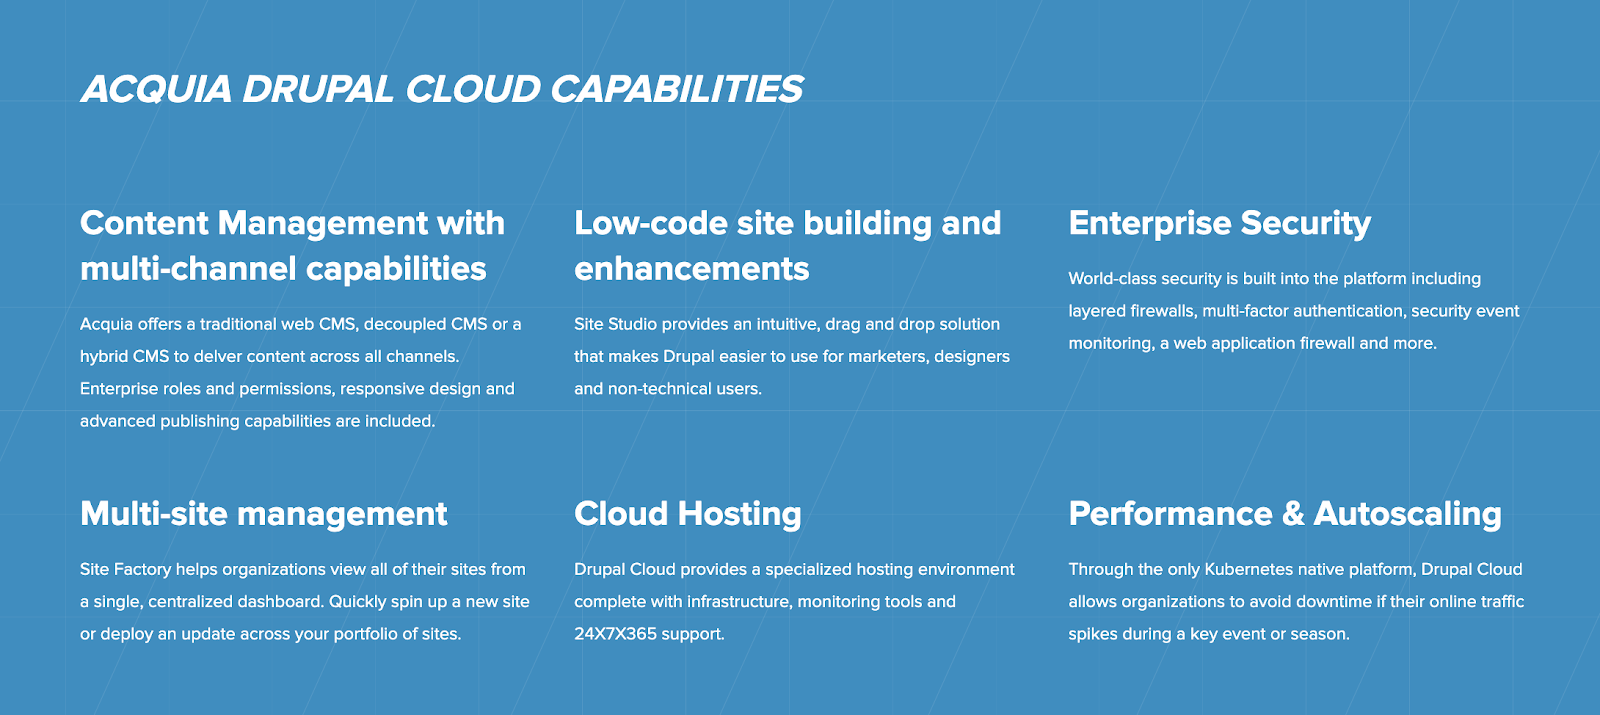 Acquia Drupal Cloud Capabilities on blue background